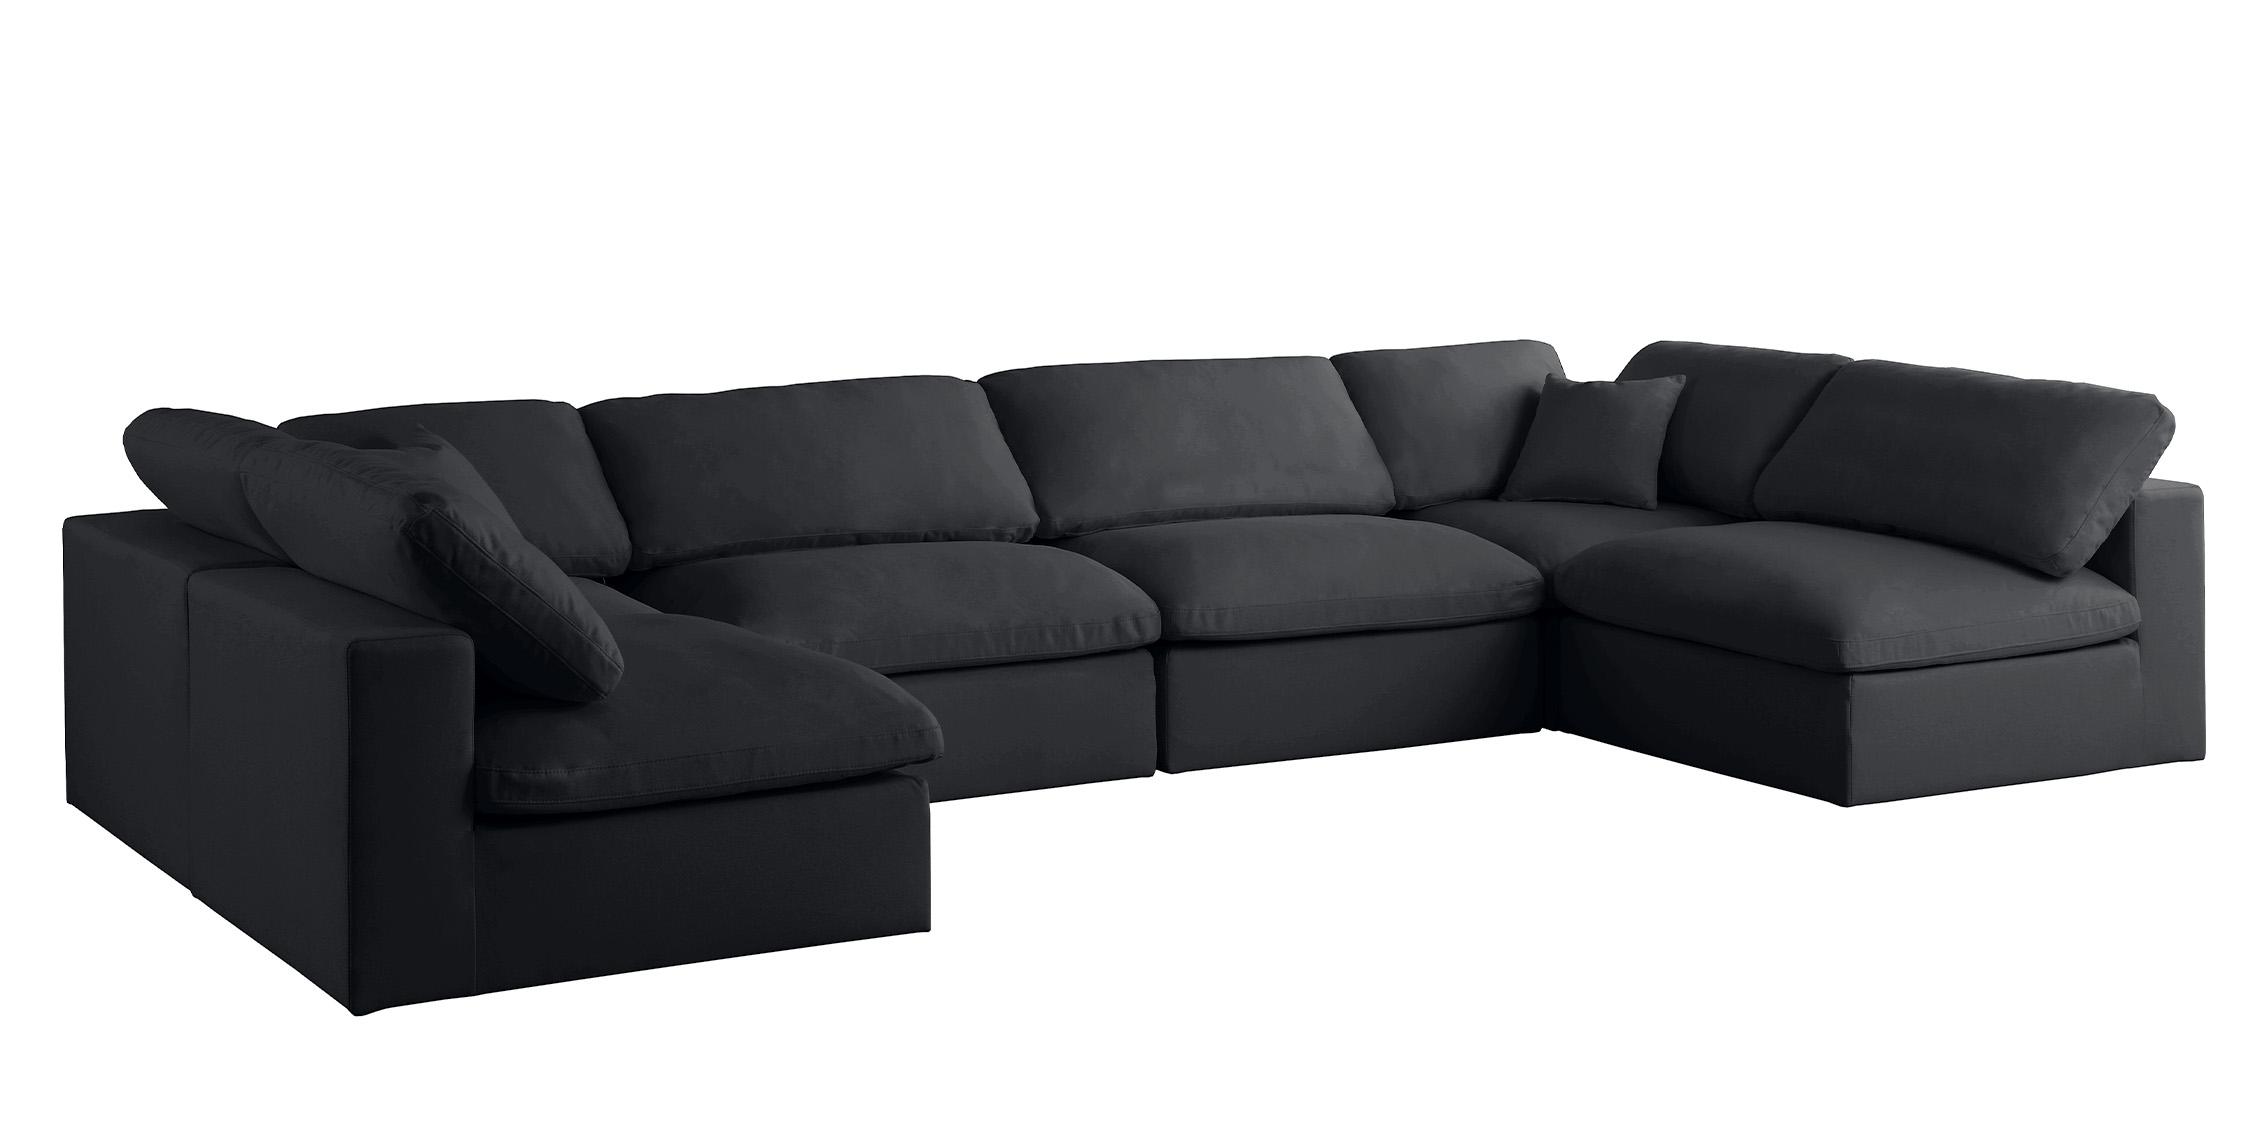 Contemporary, Modern Modular Sectional Sofa 602Black-Sec6D 602Black-Sec6D in Black Fabric